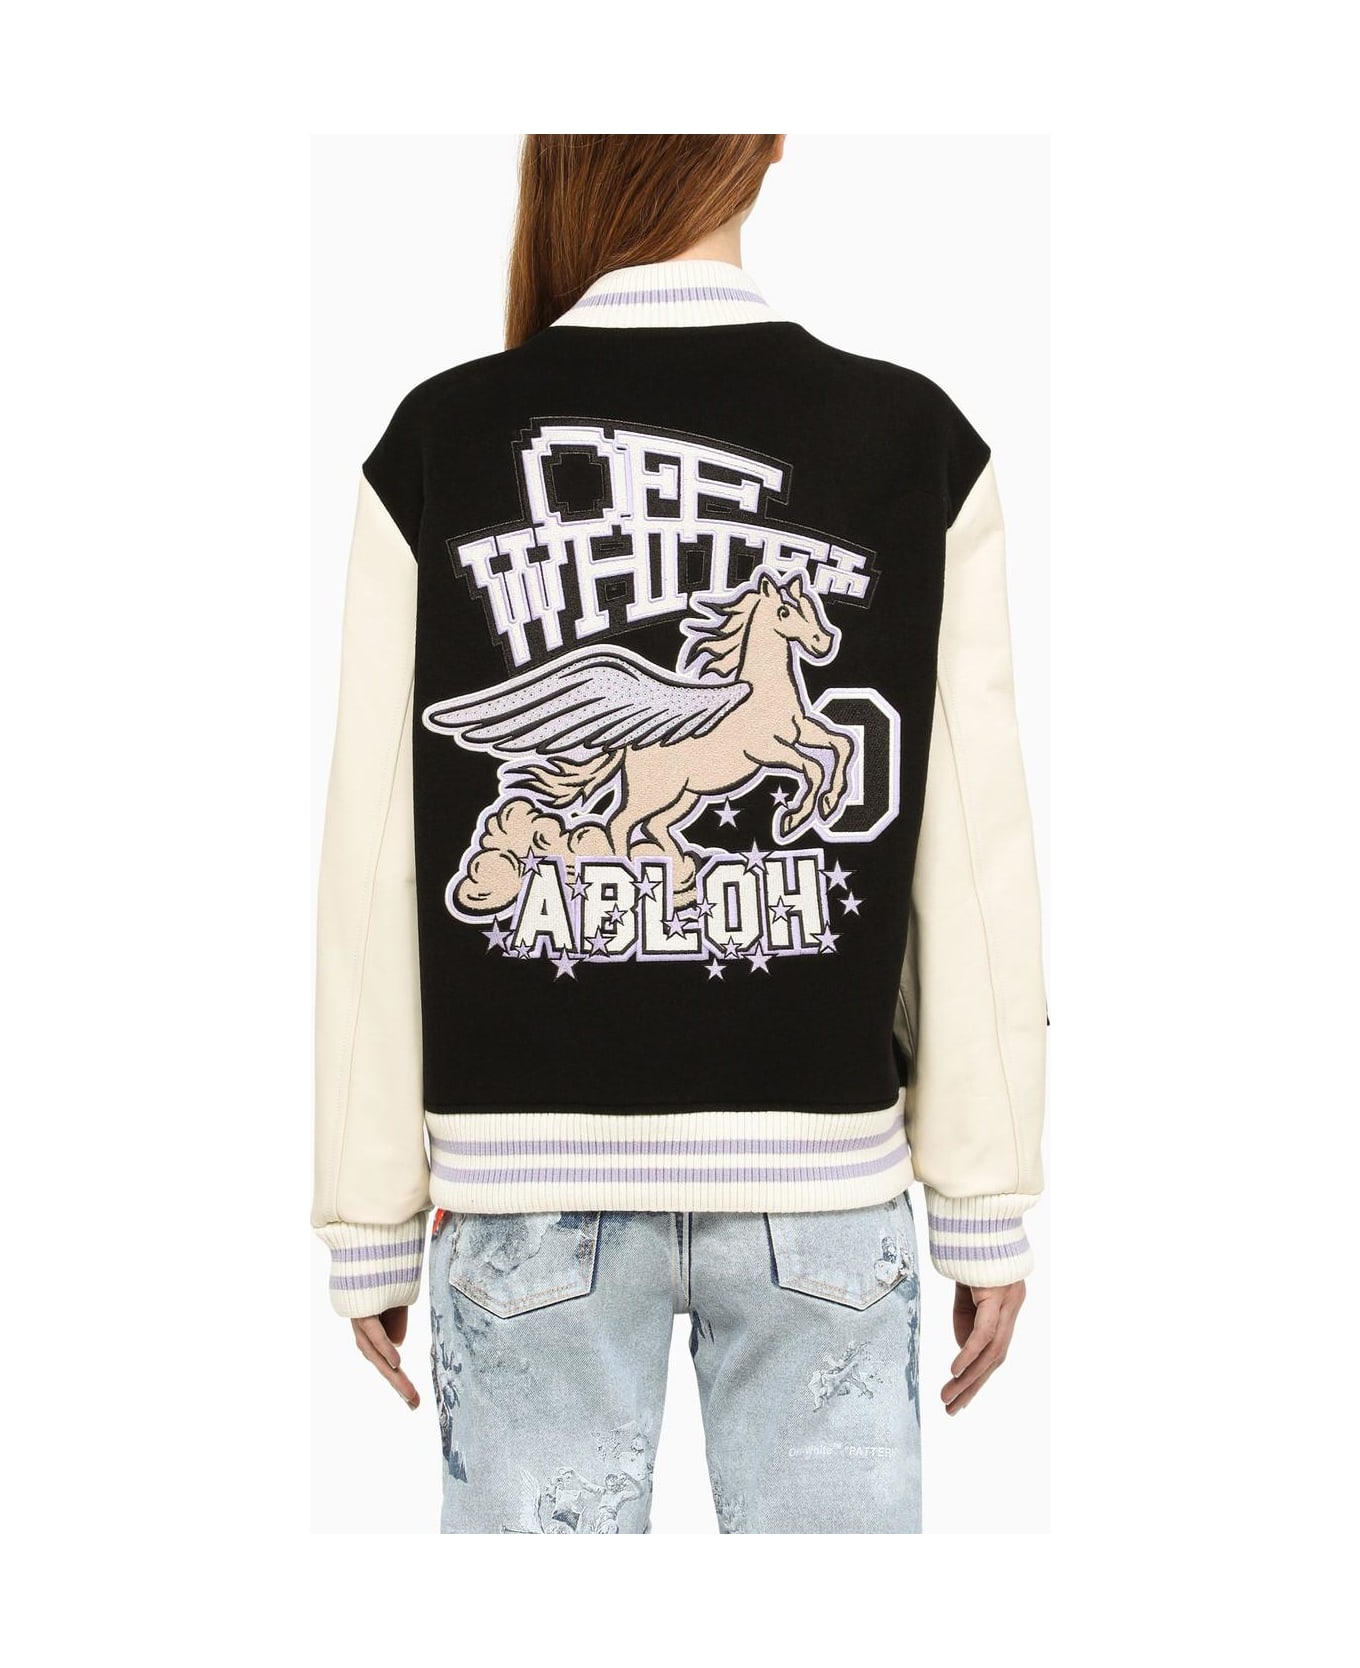 Off-White Varsity Jacket - Black ジャケット